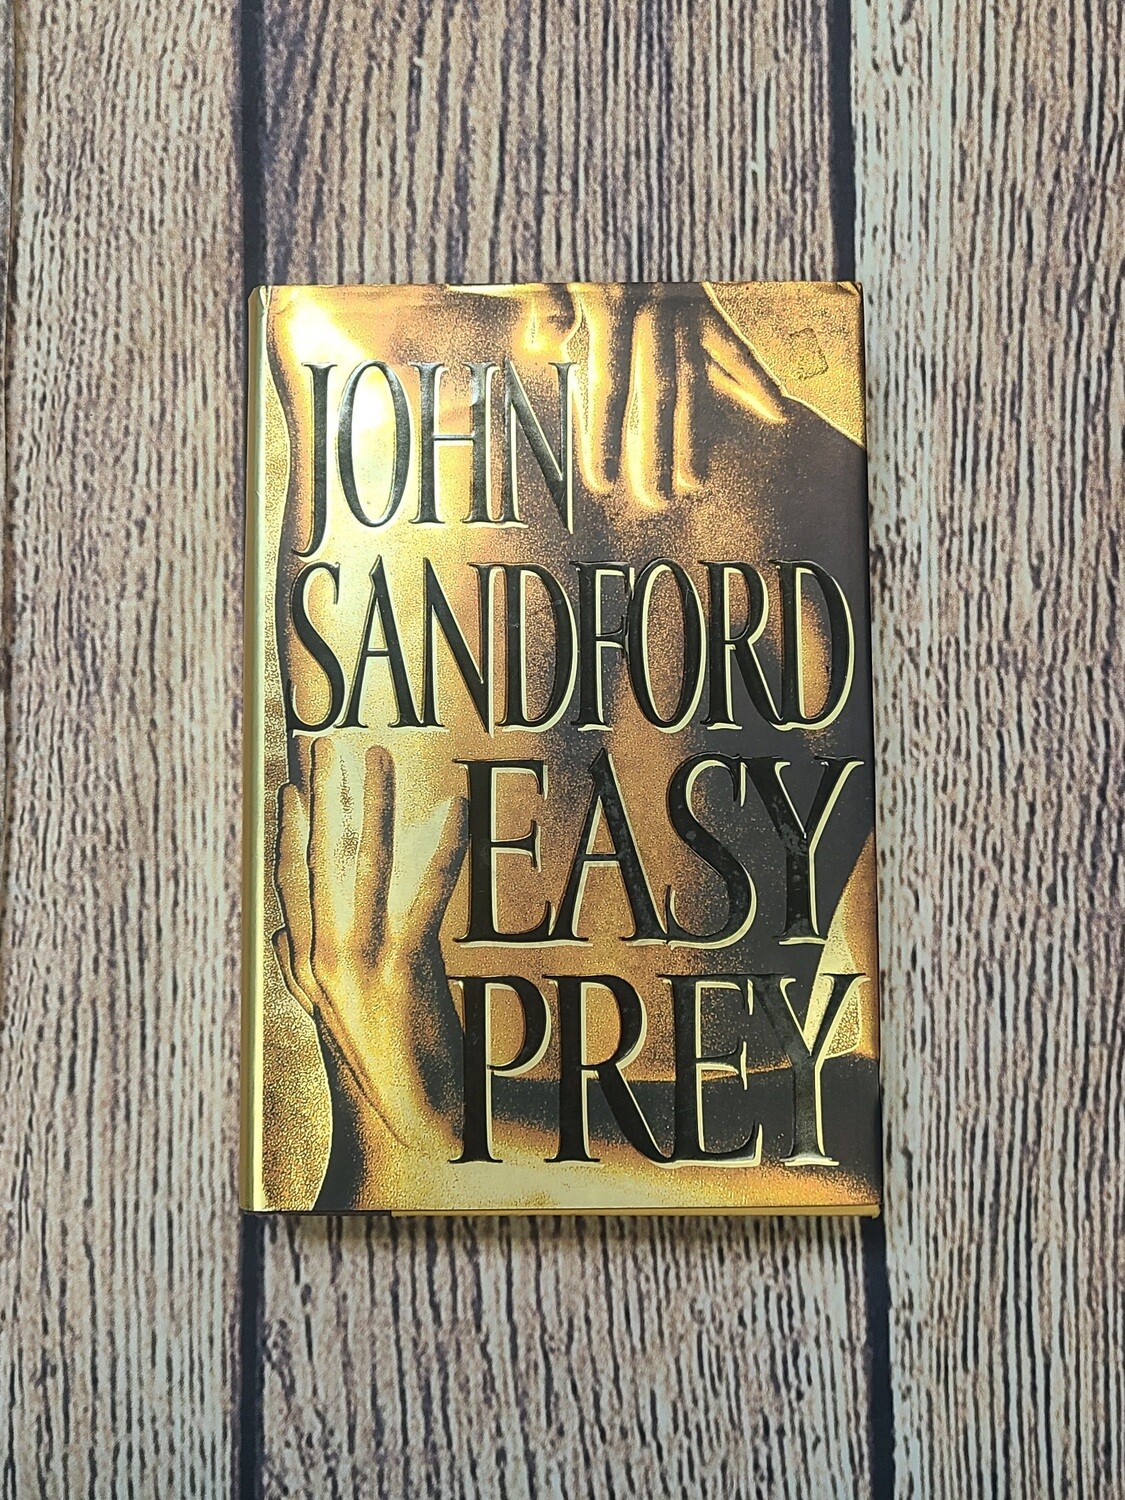 Easy Prey by John Sandford - Hardback